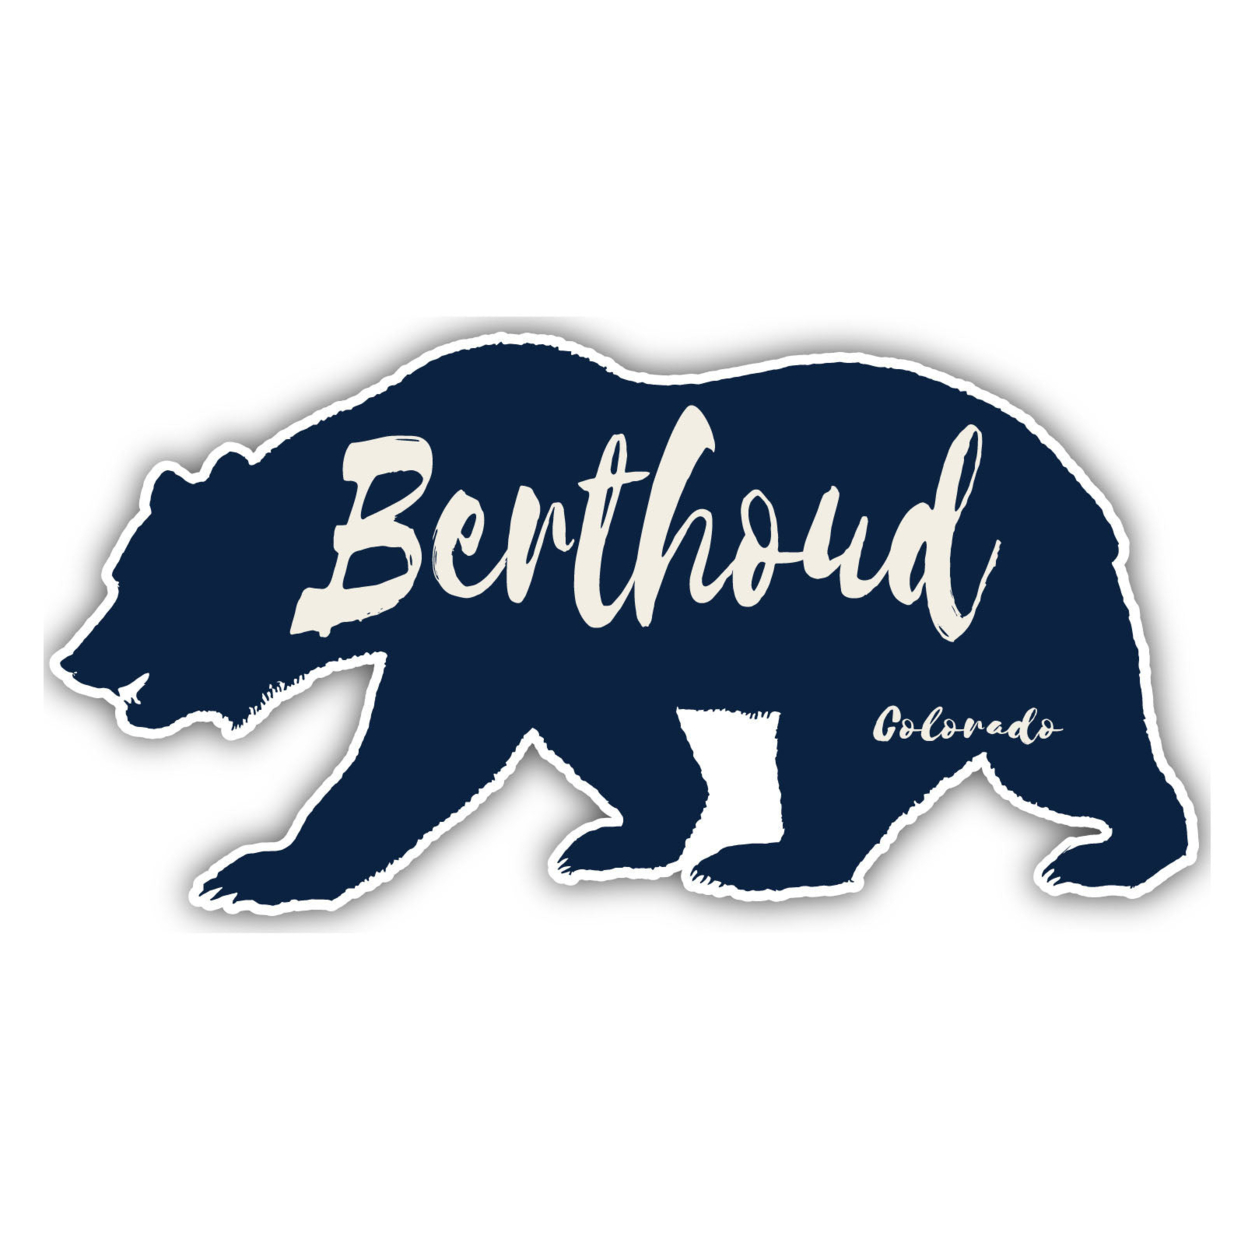 Berthoud Colorado Souvenir Decorative Stickers (Choose Theme And Size) - Single Unit, 10-Inch, Tent